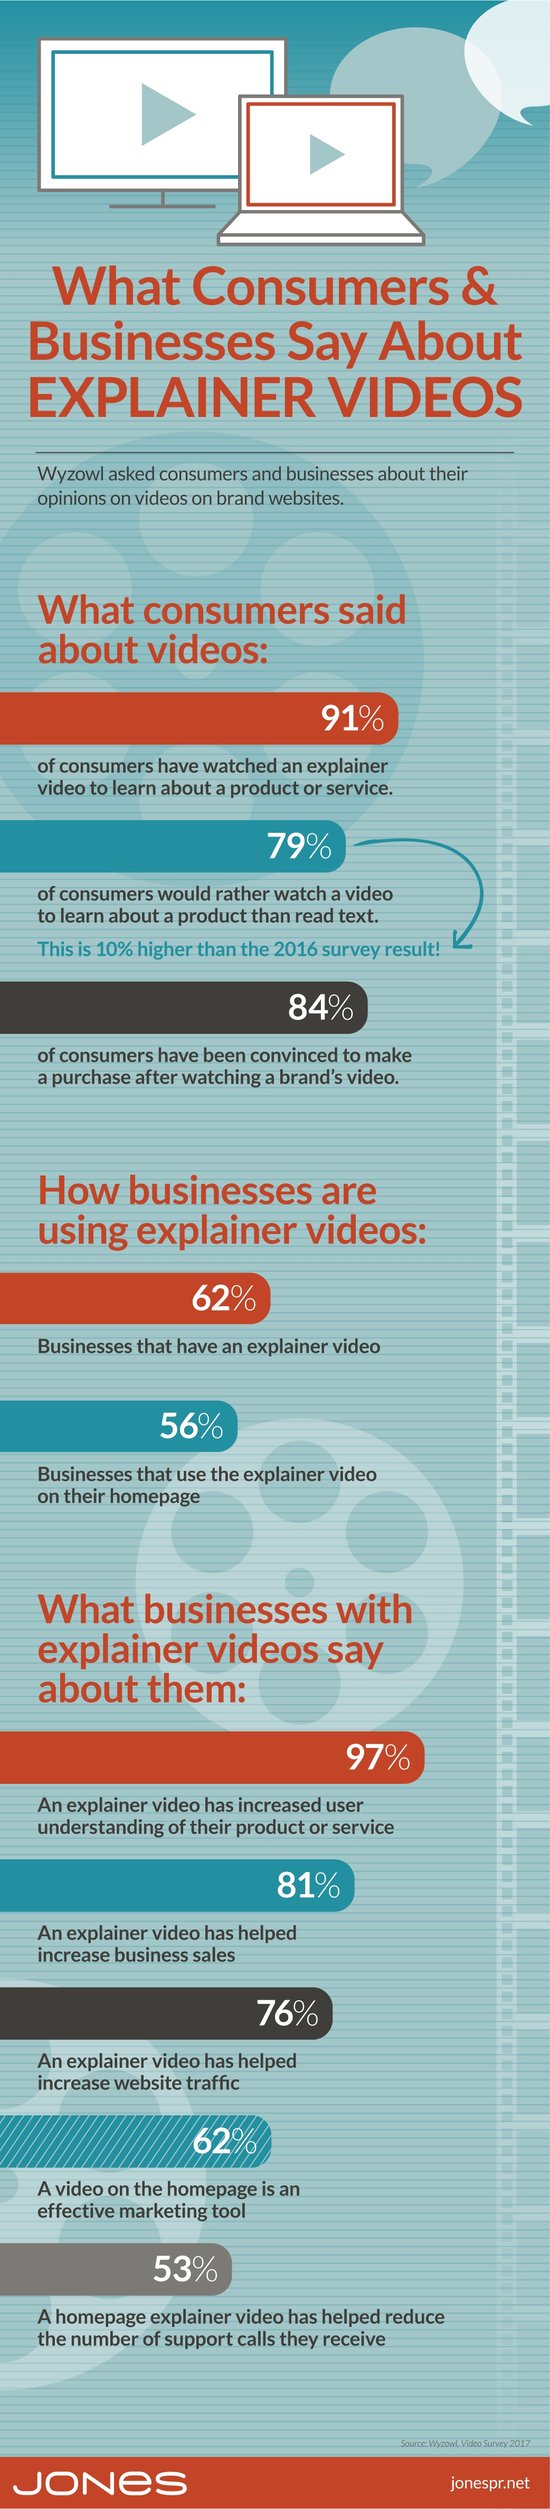 video marketing infographic explainer video